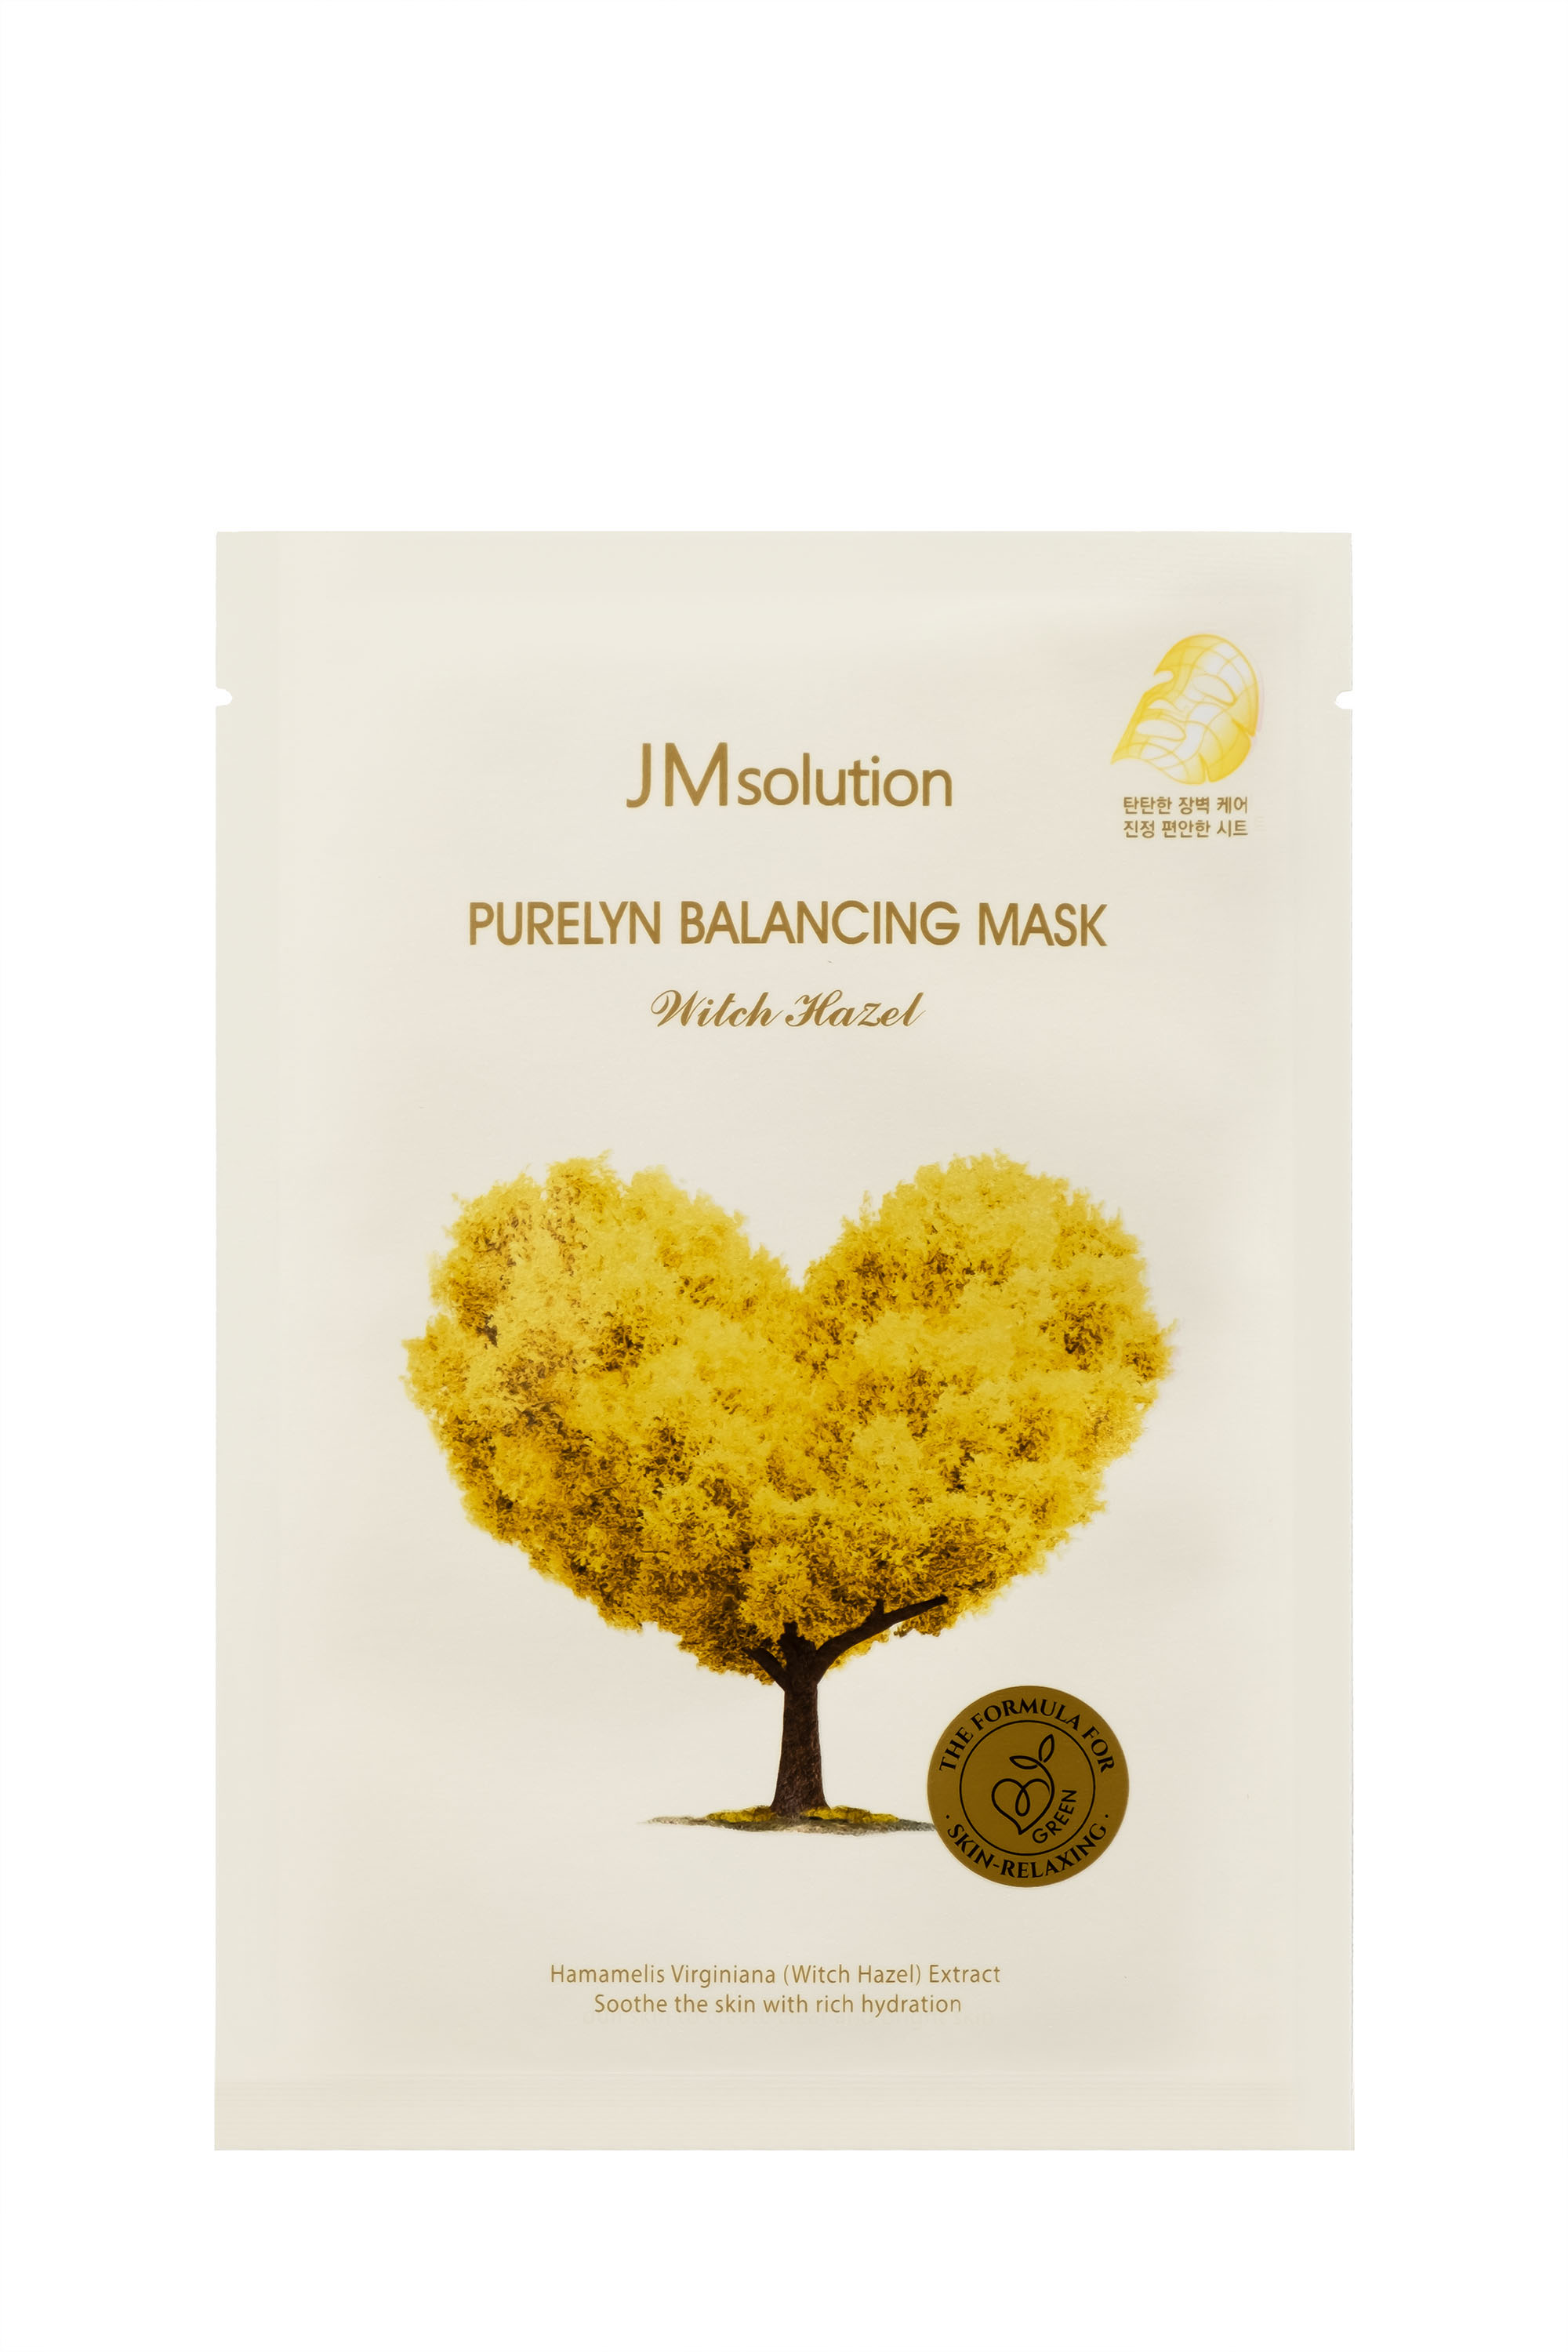  JMsolution Purelyn Balancing Mask ..